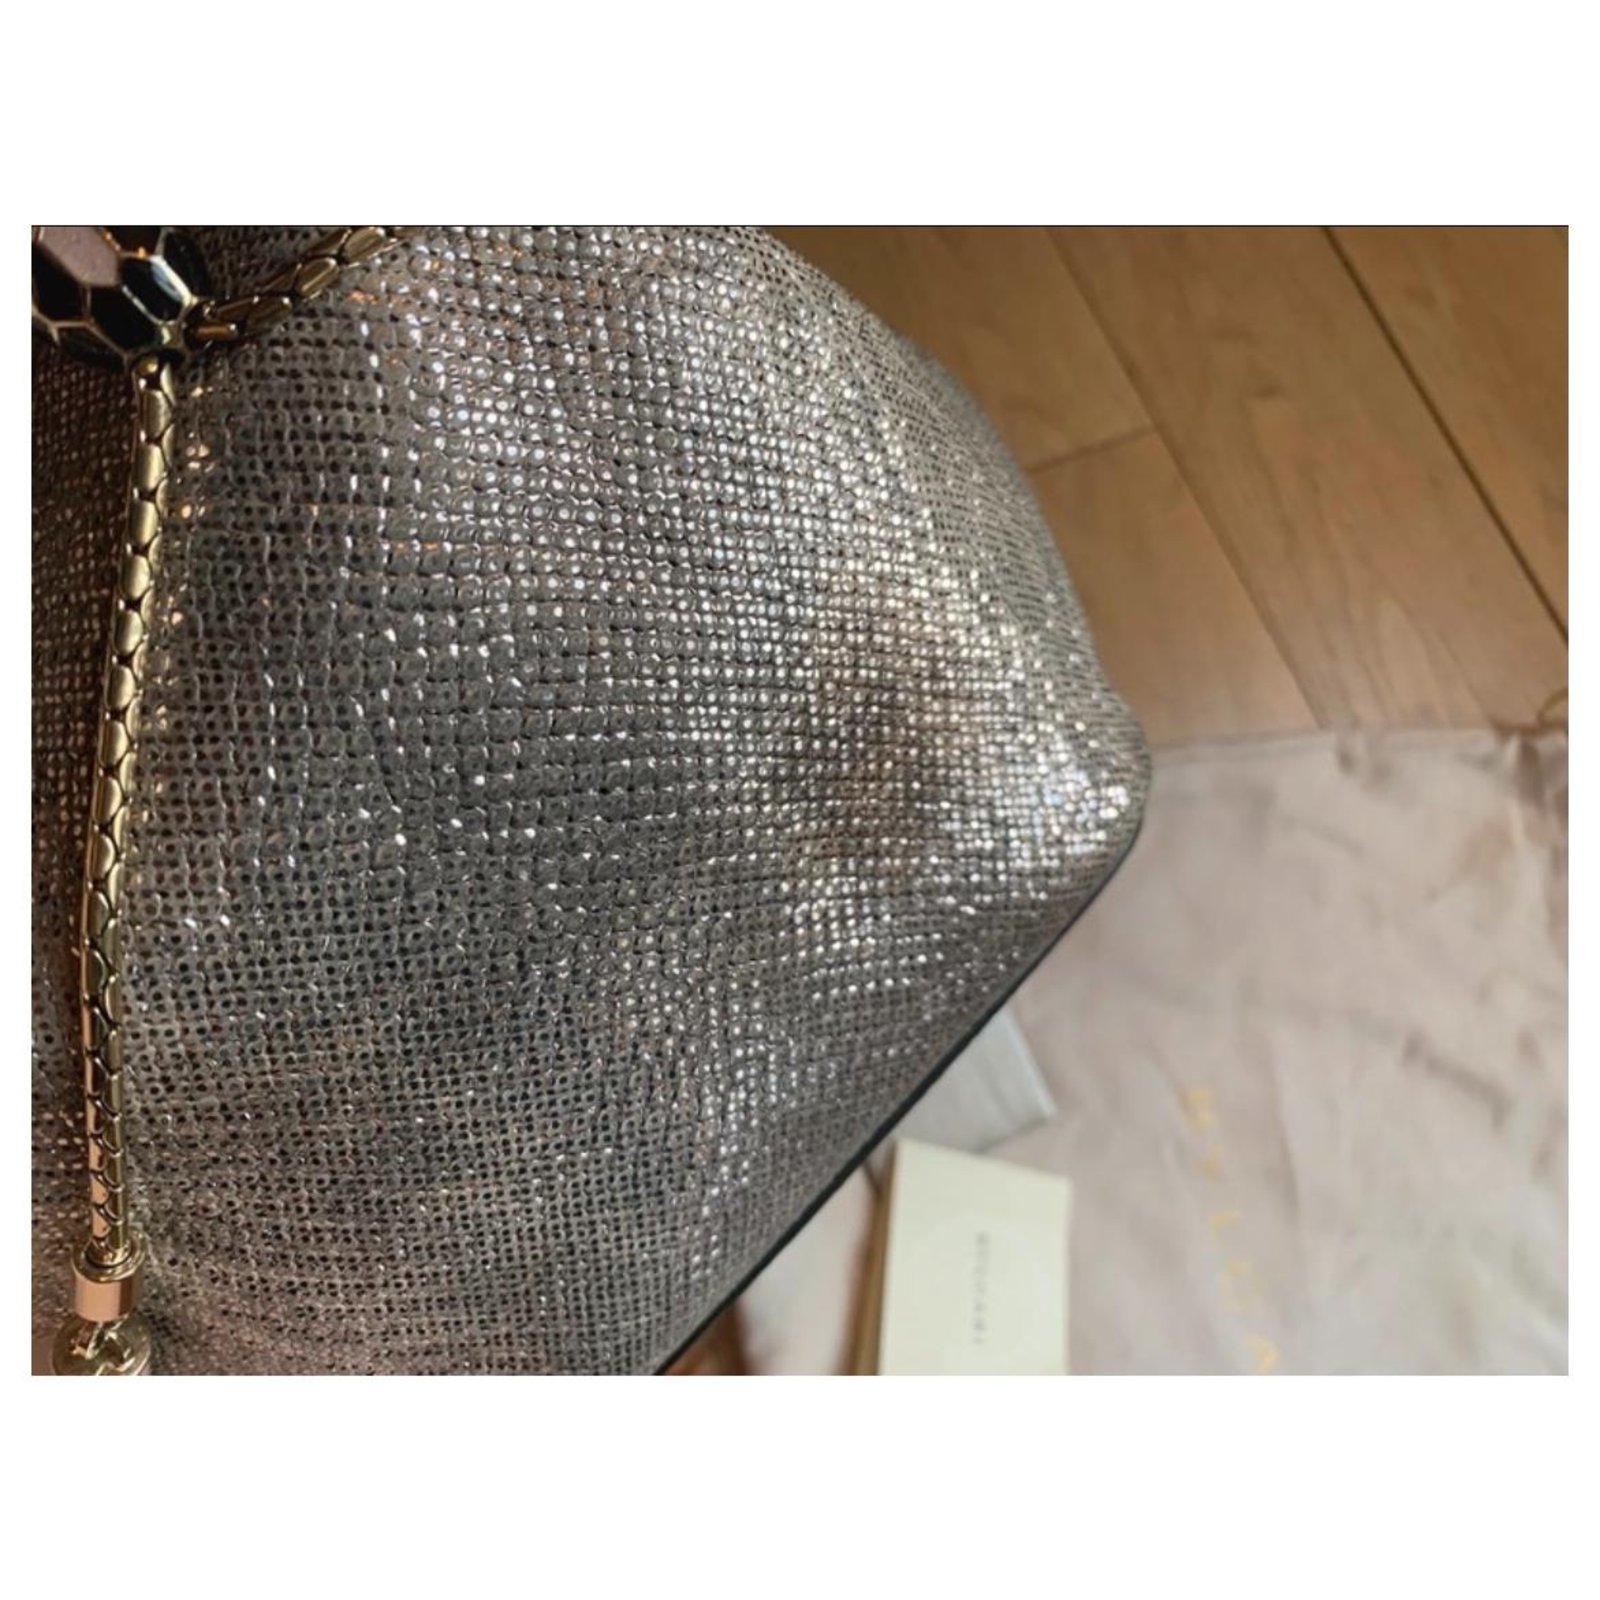 Bvlgari Serpenti Heritage Mesh Metallic Leather Bucket Bag In Light Gold